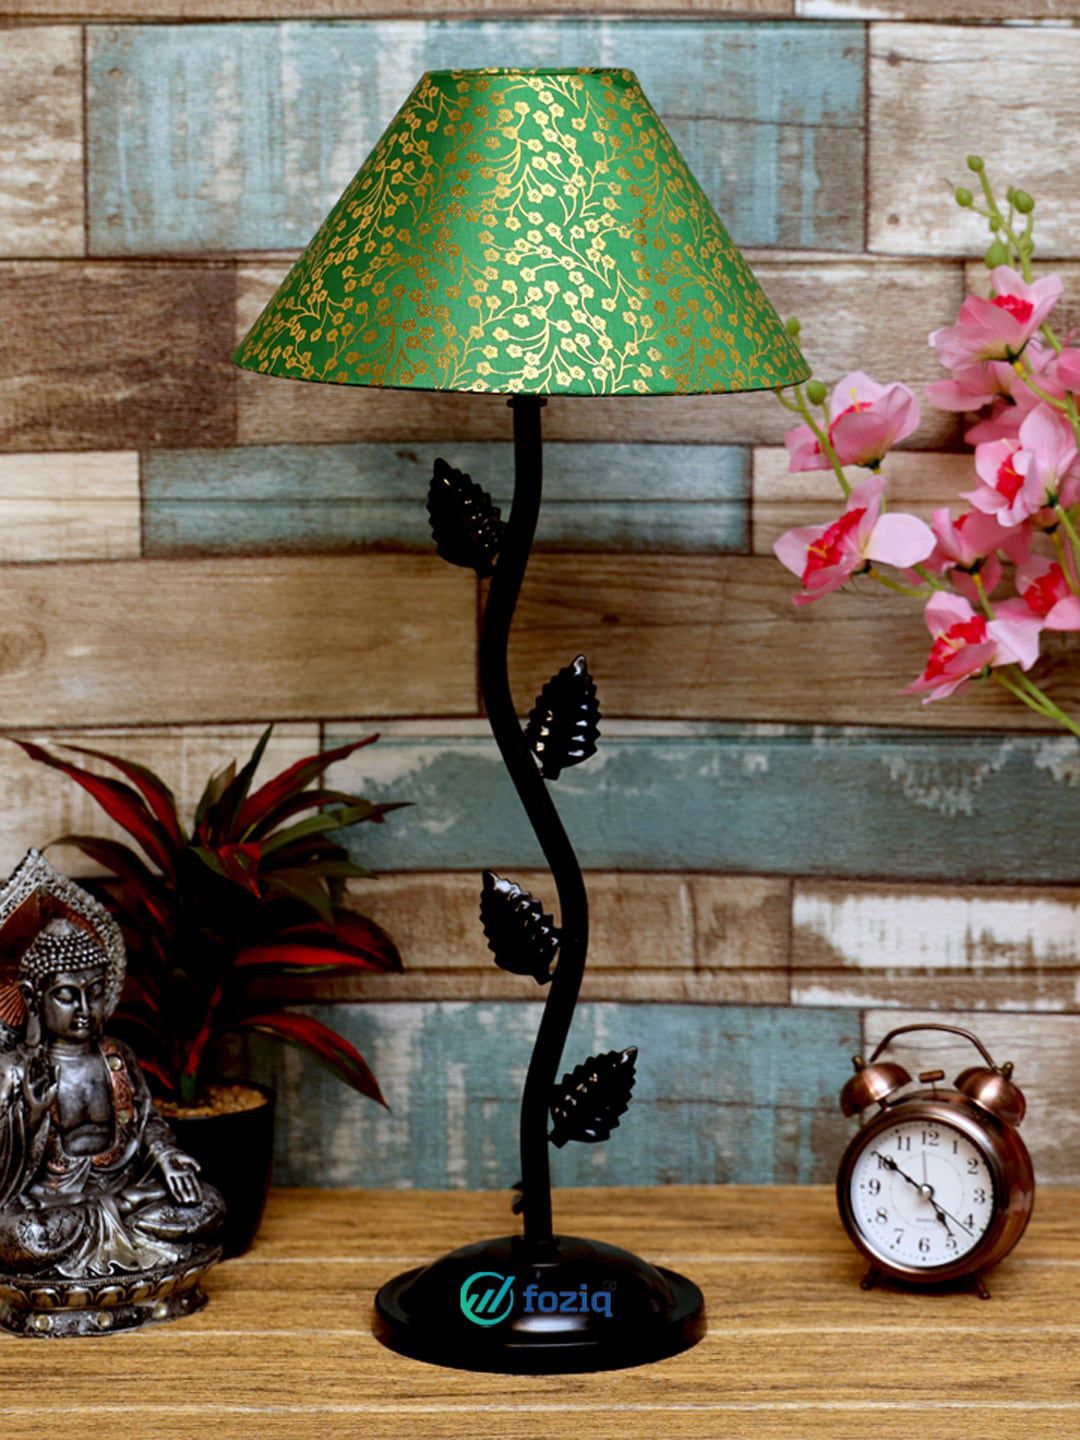 foziq Black & Green Printed Table Lamps Price in India